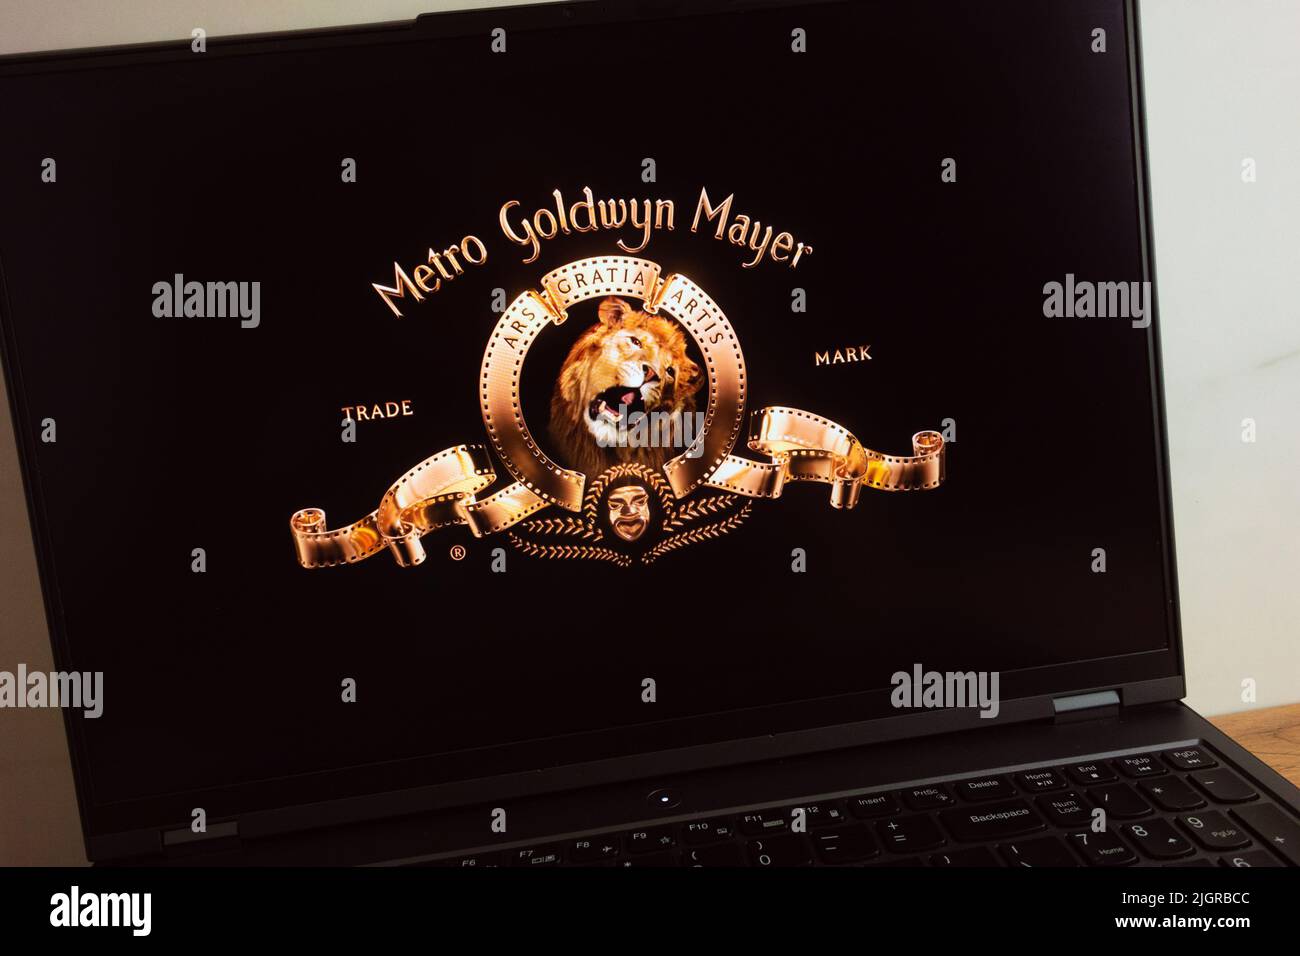 KONSKIE, POLAND - July 11, 2022: MGM Metro-Goldwyn Mayer Studios media company logo displayed on laptop computer screen Stock Photo